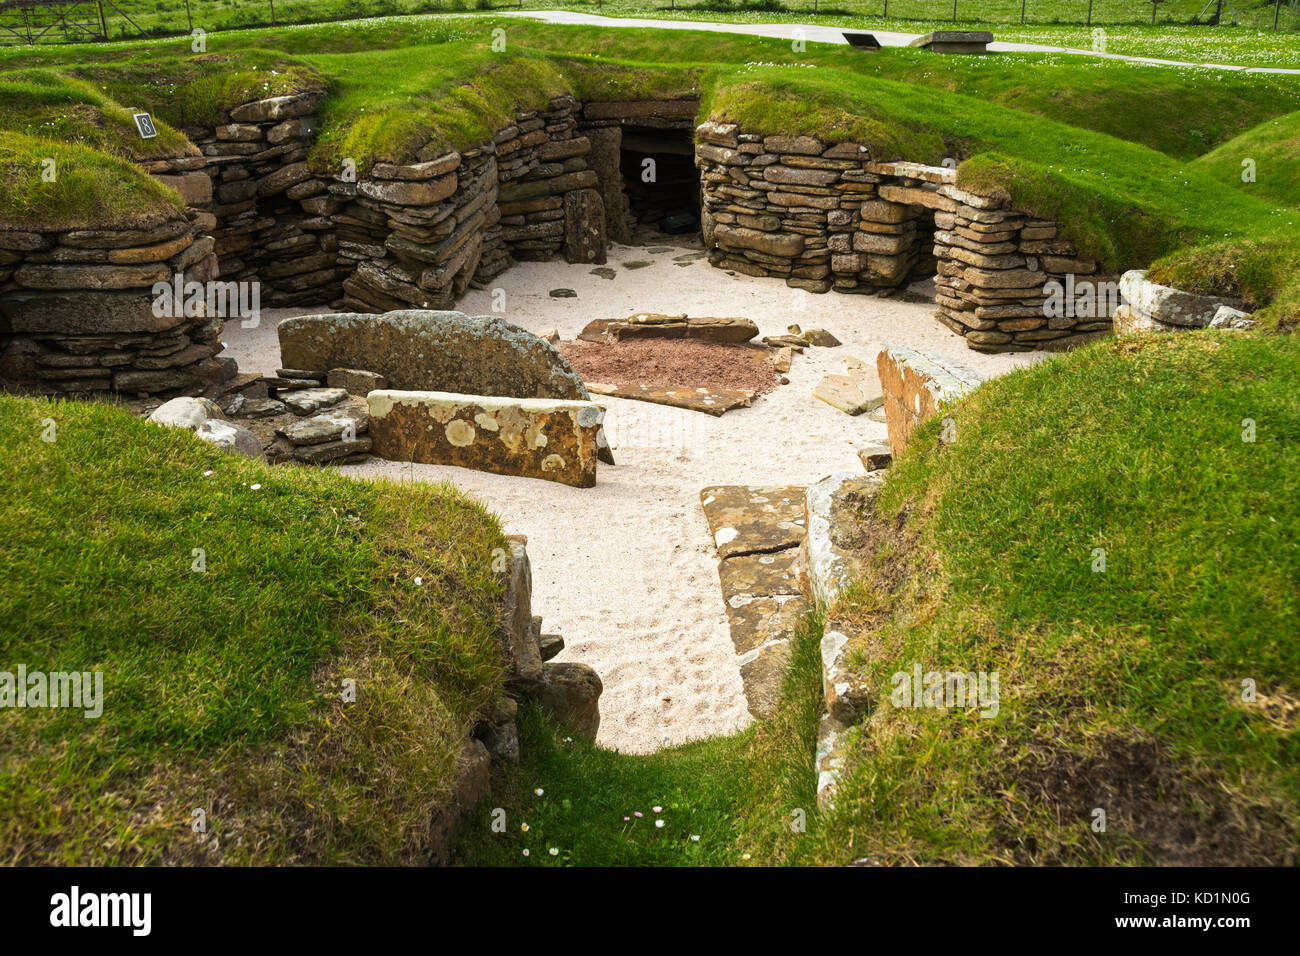 No. 8 dwelling at Skara Brae Neolithic Village.,Orkney Mainland, Scotland, UK. Stock Photo